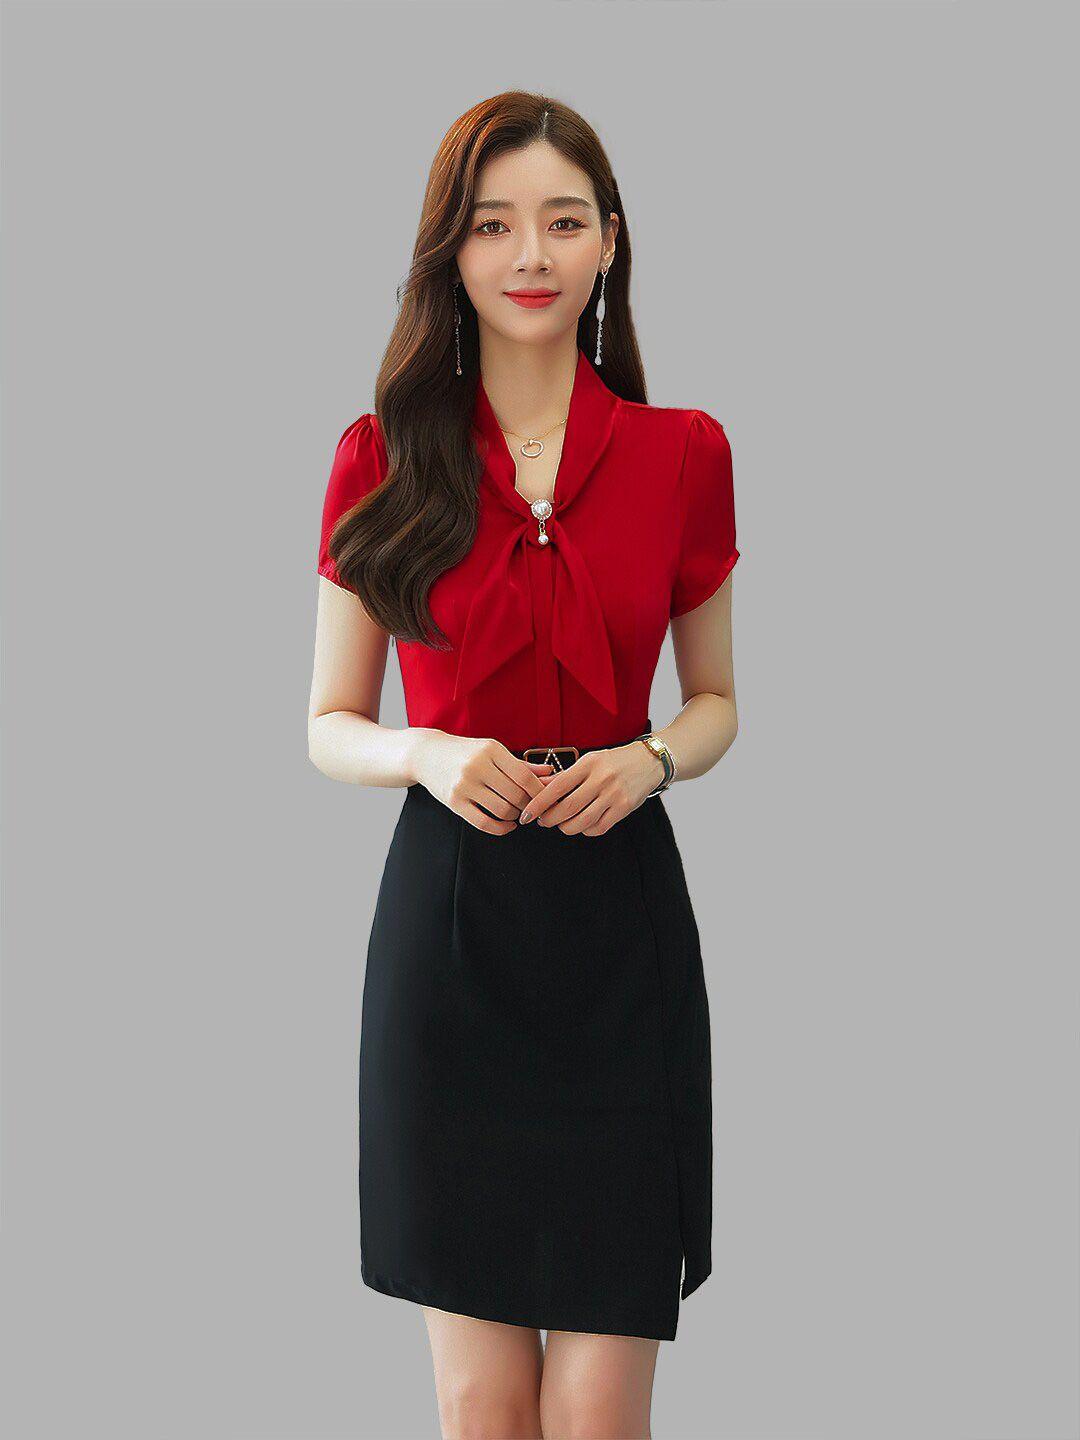 jc collection women red & black colourblocked sheath dress